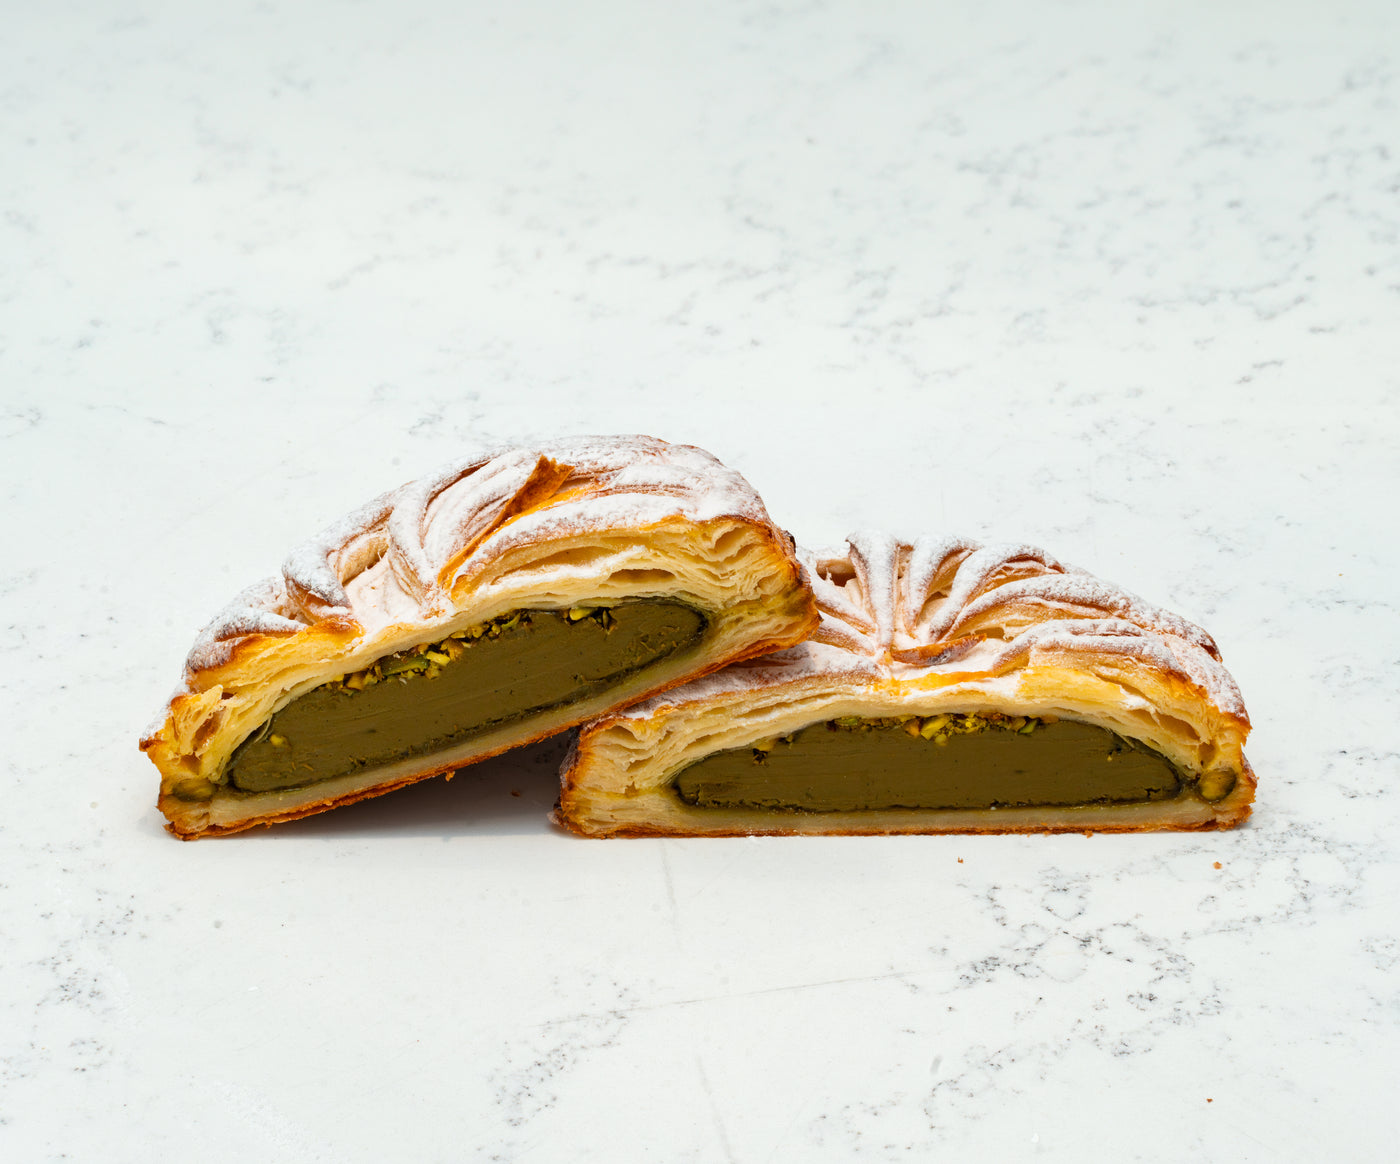 Gluten Free Pistachio Galette Des Rois (King's Cake)